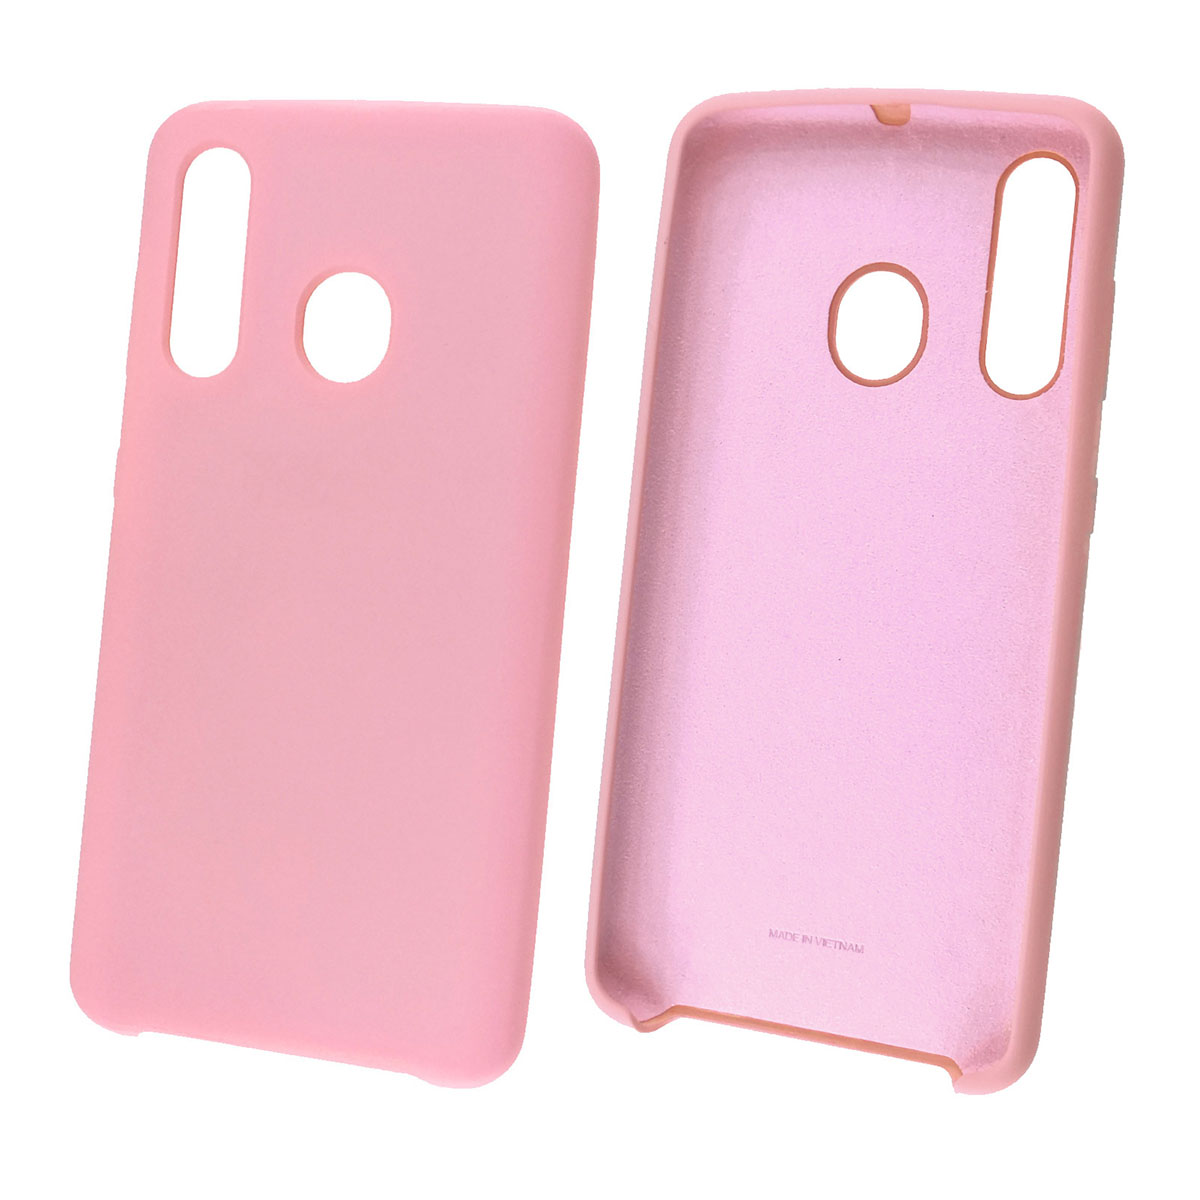 Чехол накладка Silicon Cover для SAMSUNG Galaxy A60 2019 (SM-A605), Galaxy M40 (SM-M405), силикон, бархат, цвет светло розовый